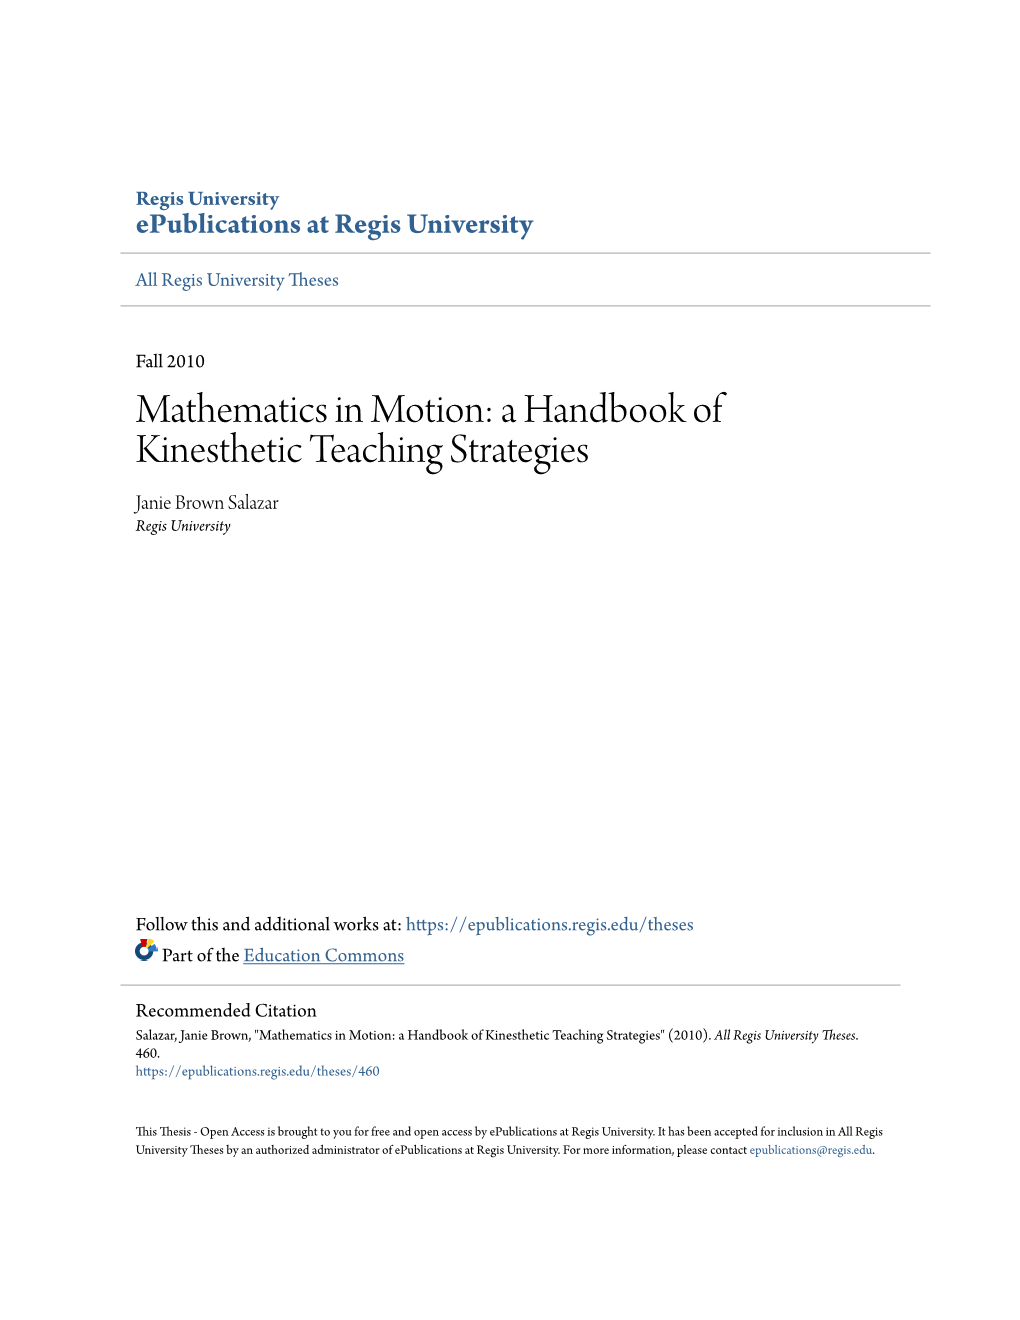 Mathematics in Motion: a Handbook of Kinesthetic Teaching Strategies Janie Brown Salazar Regis University